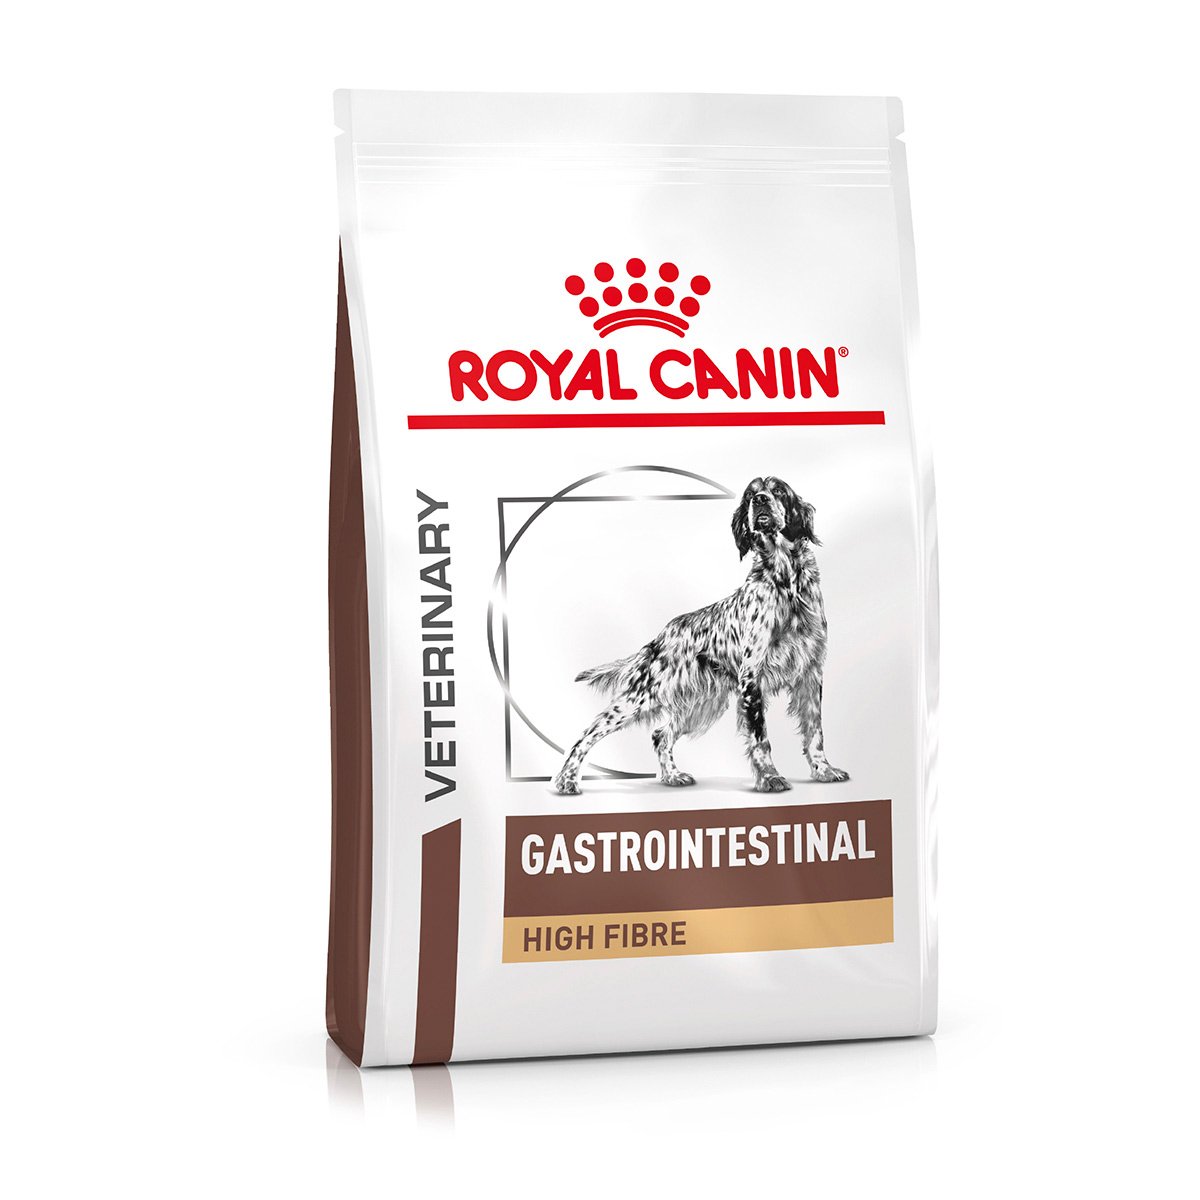 ROYAL CANIN® Veterinary GASTROINTESTINAL HIGH FIBRE Trockenfutter für Hunde 2kg von Royal Canin